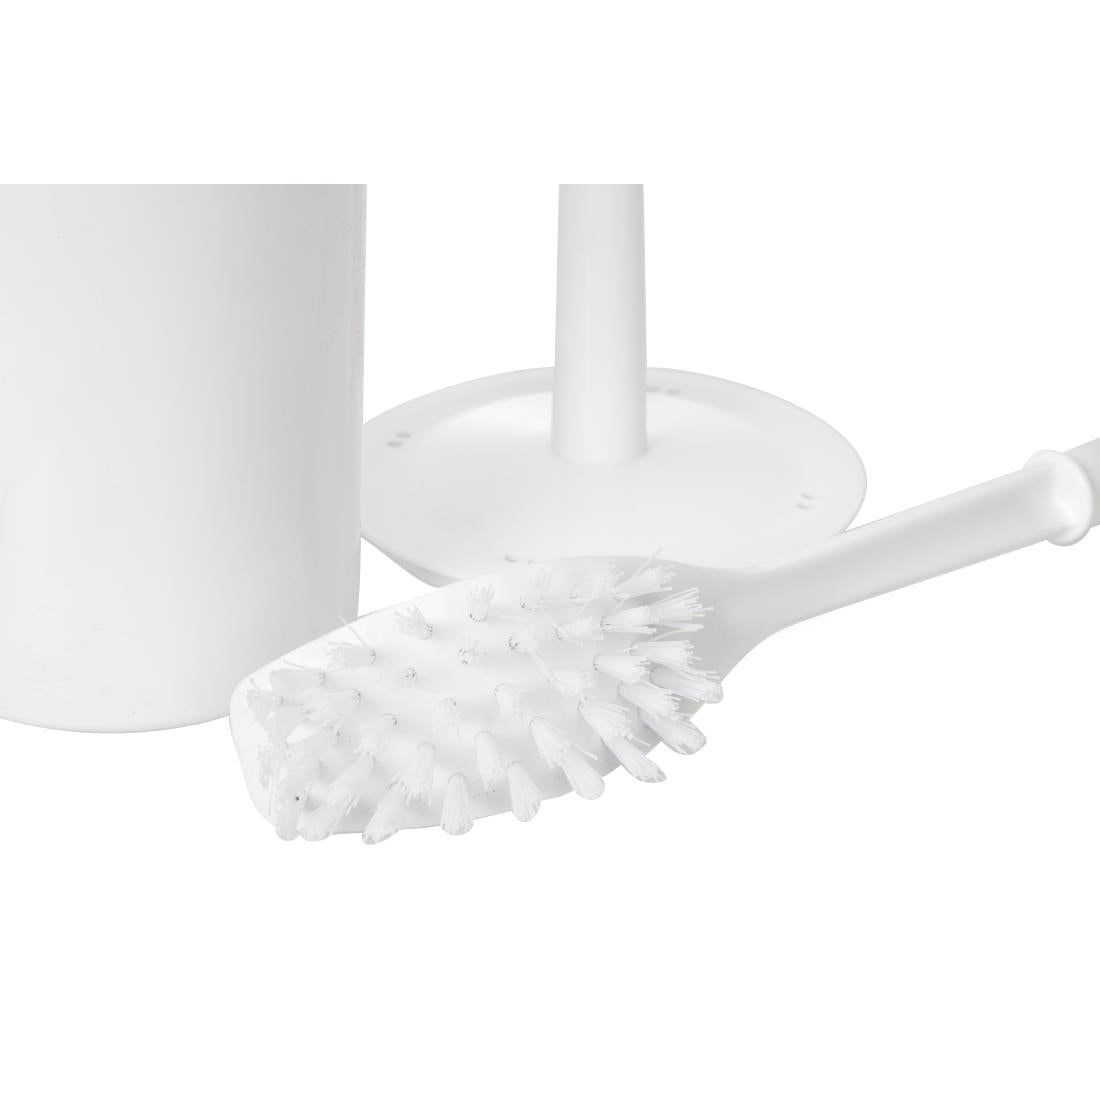 L569 Jantex Toilet Brush and Holder White JD Catering Equipment Solutions Ltd